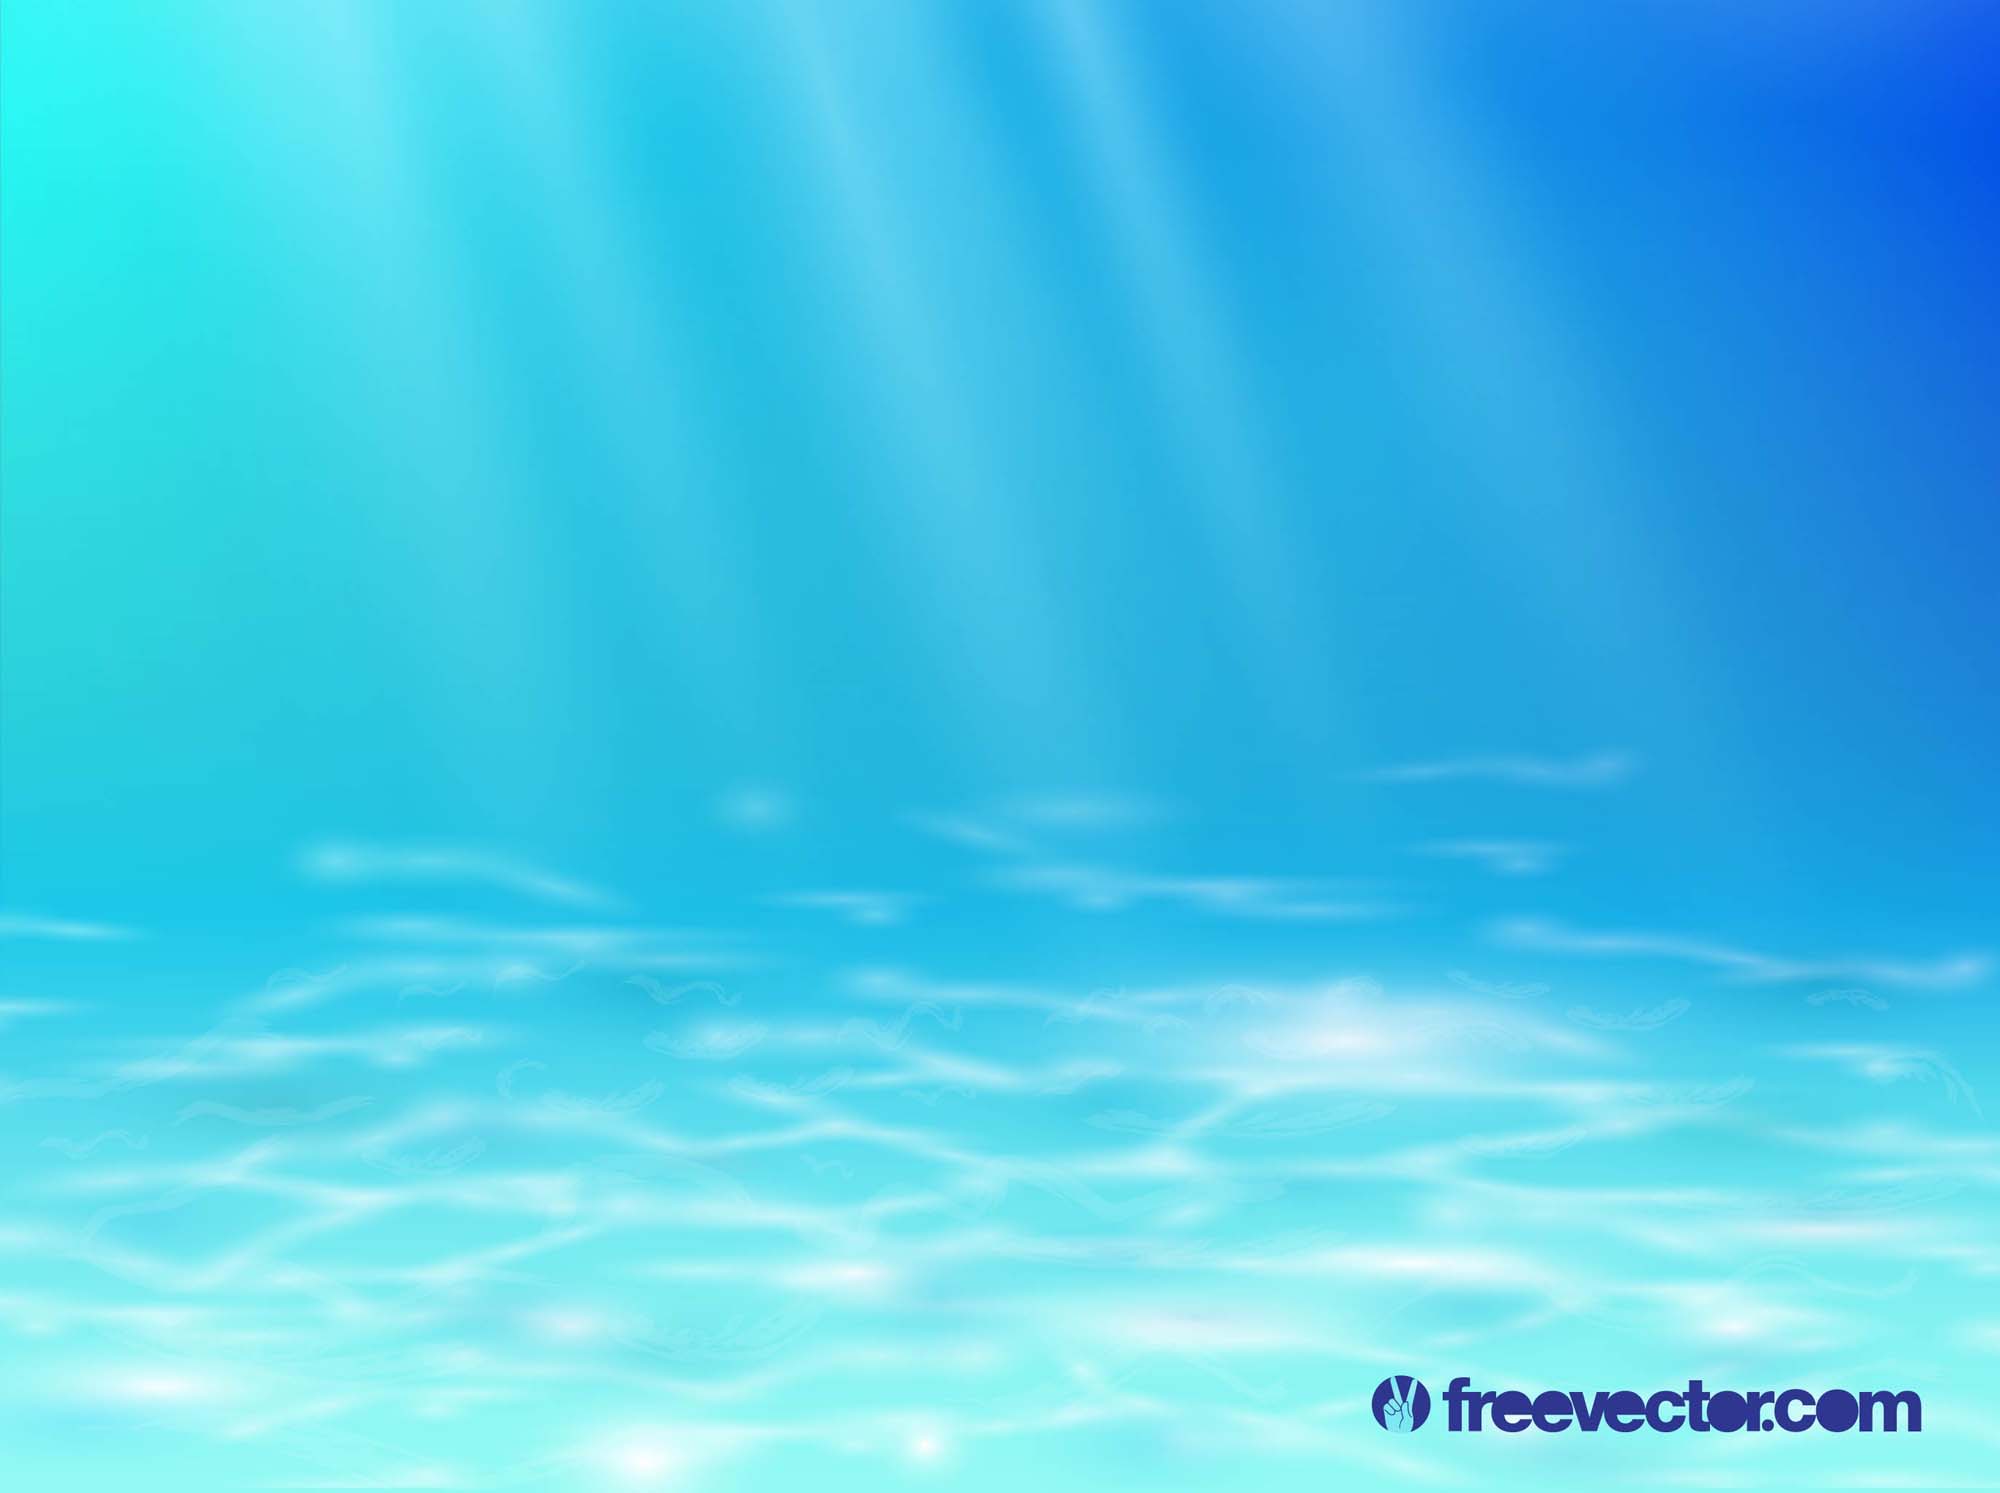 Realistic Underwater Illustration Vector Art